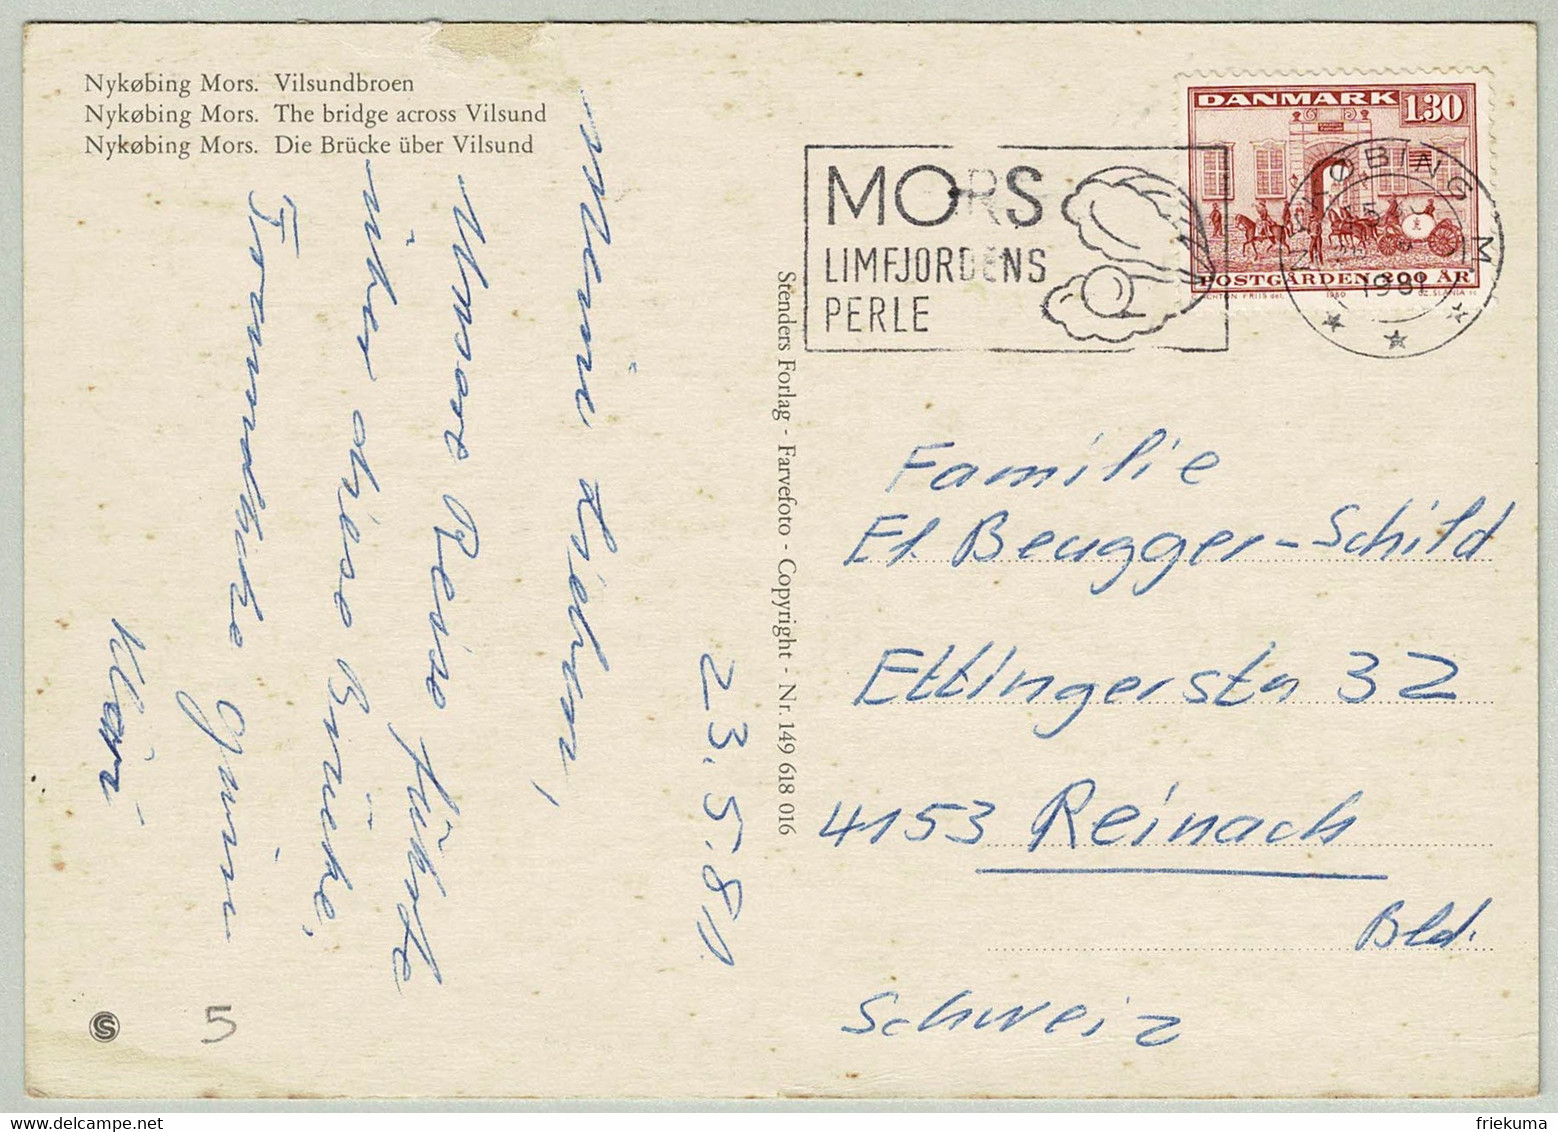 Dänemark / Danmark 1981, Postkarte Nykobing Mors - Reinach (Schweiz), Insel / Ile / Island, Perle / Pearl - Islands